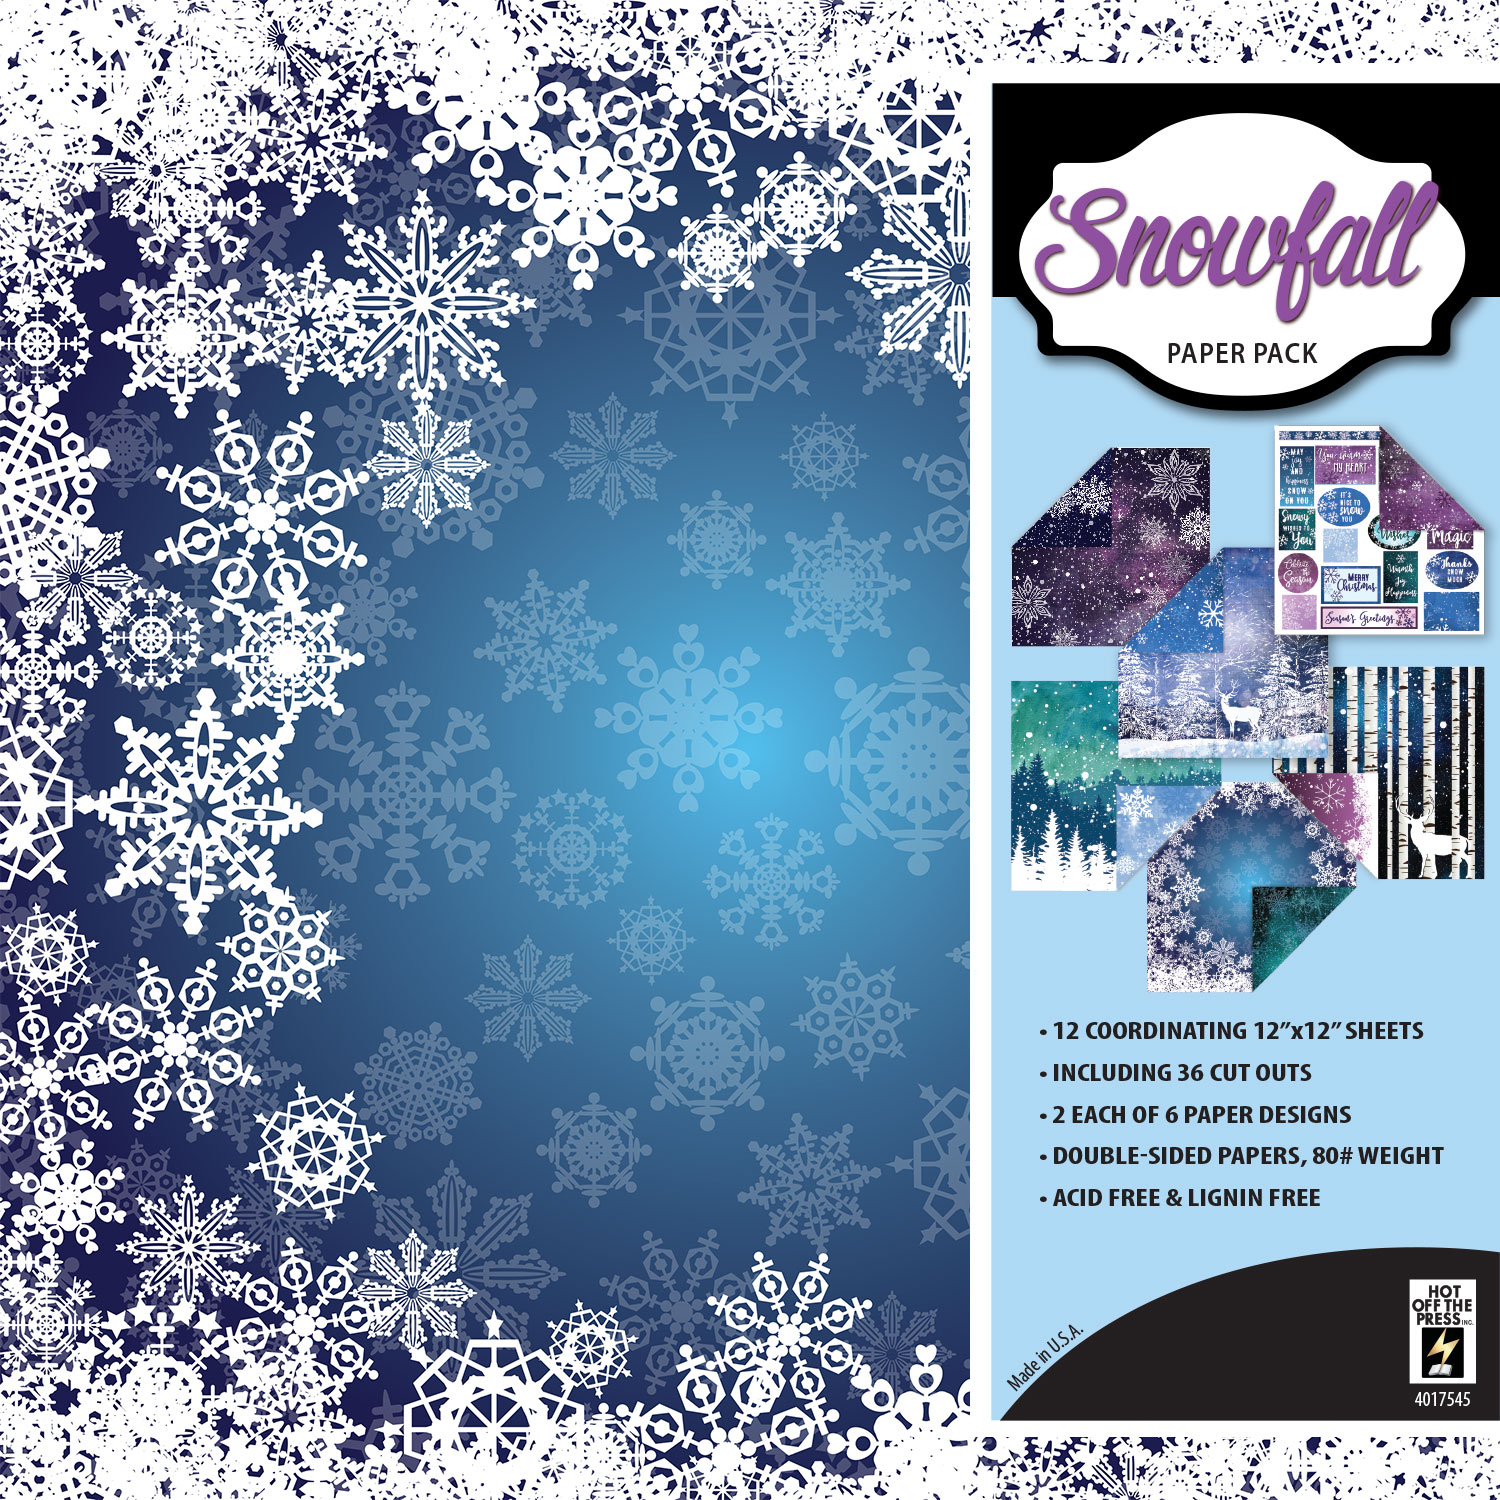 Snowfall Paper Pack, 12"x12"